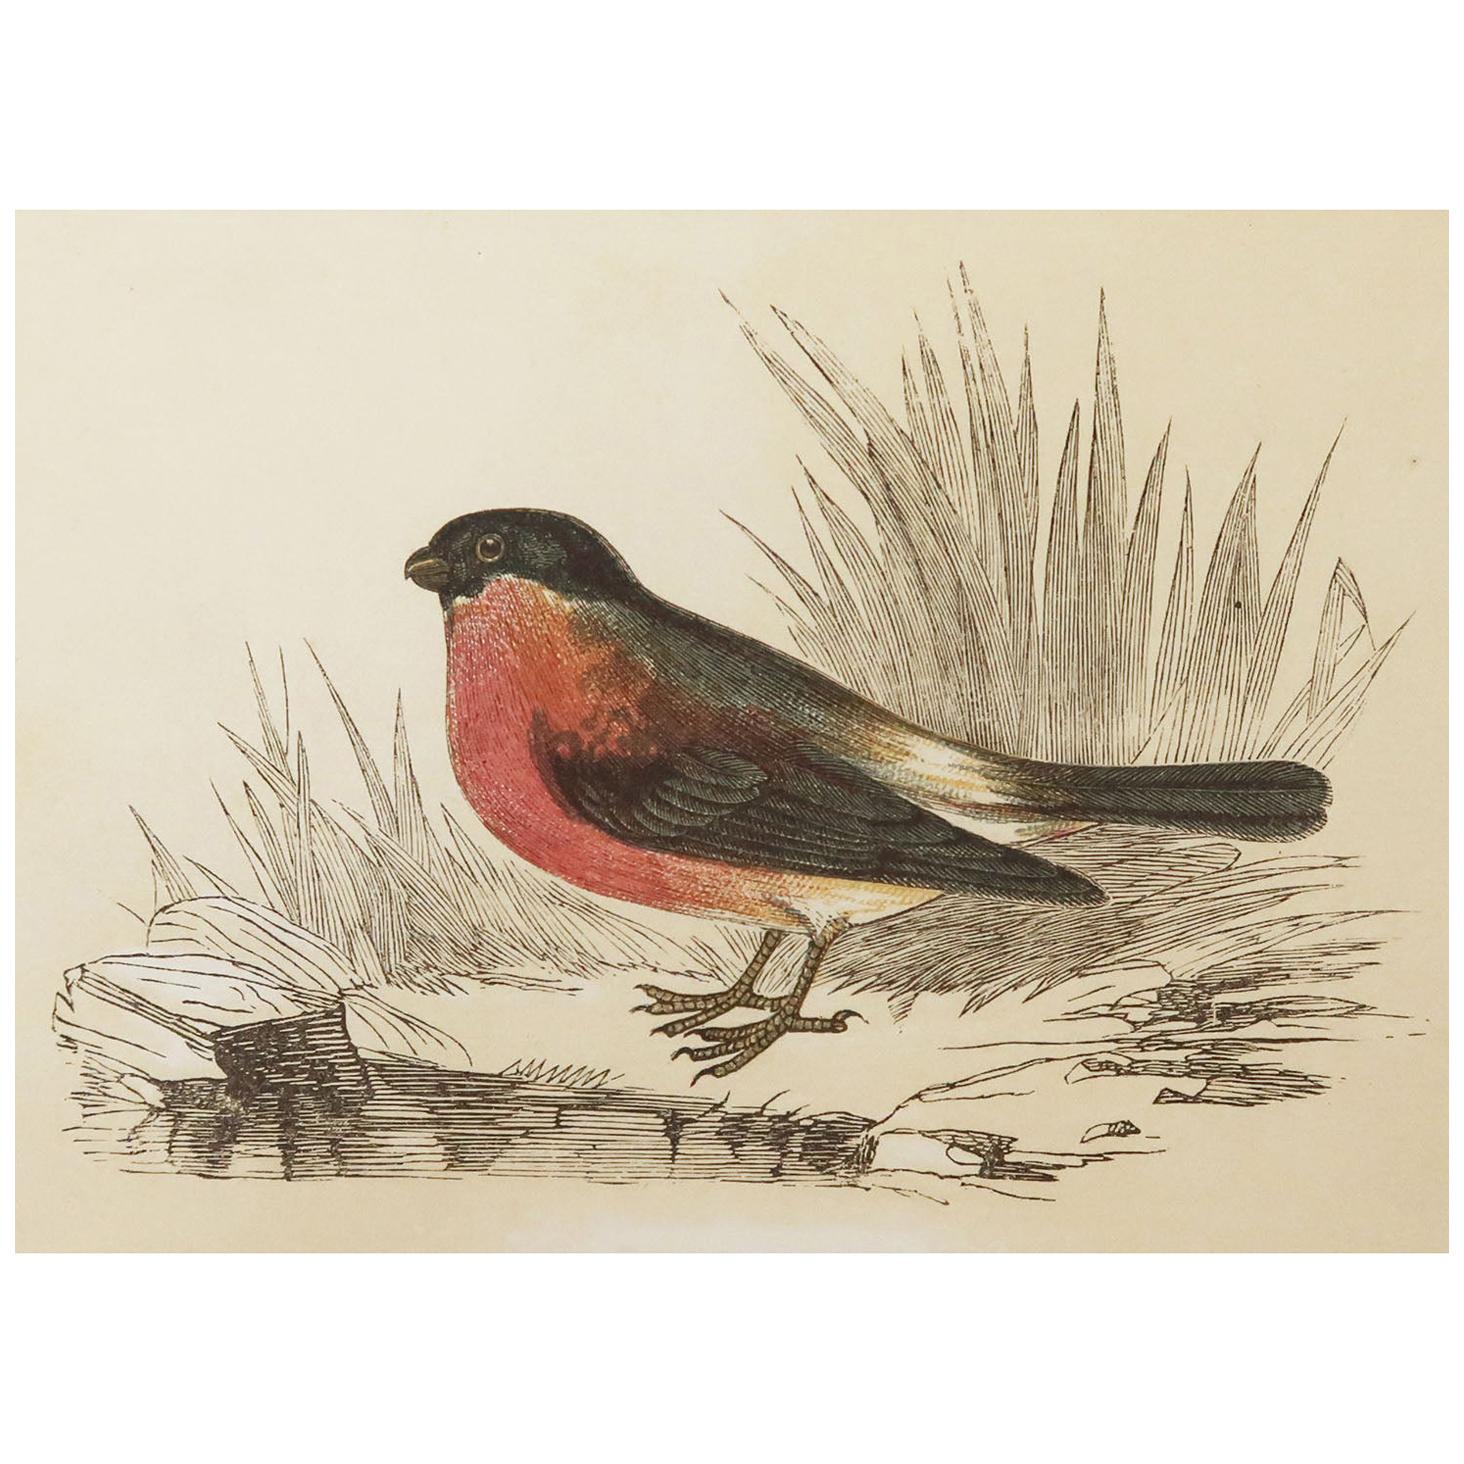 Original Antique Bird Print, the Bullfinch, Tallis circa 1850